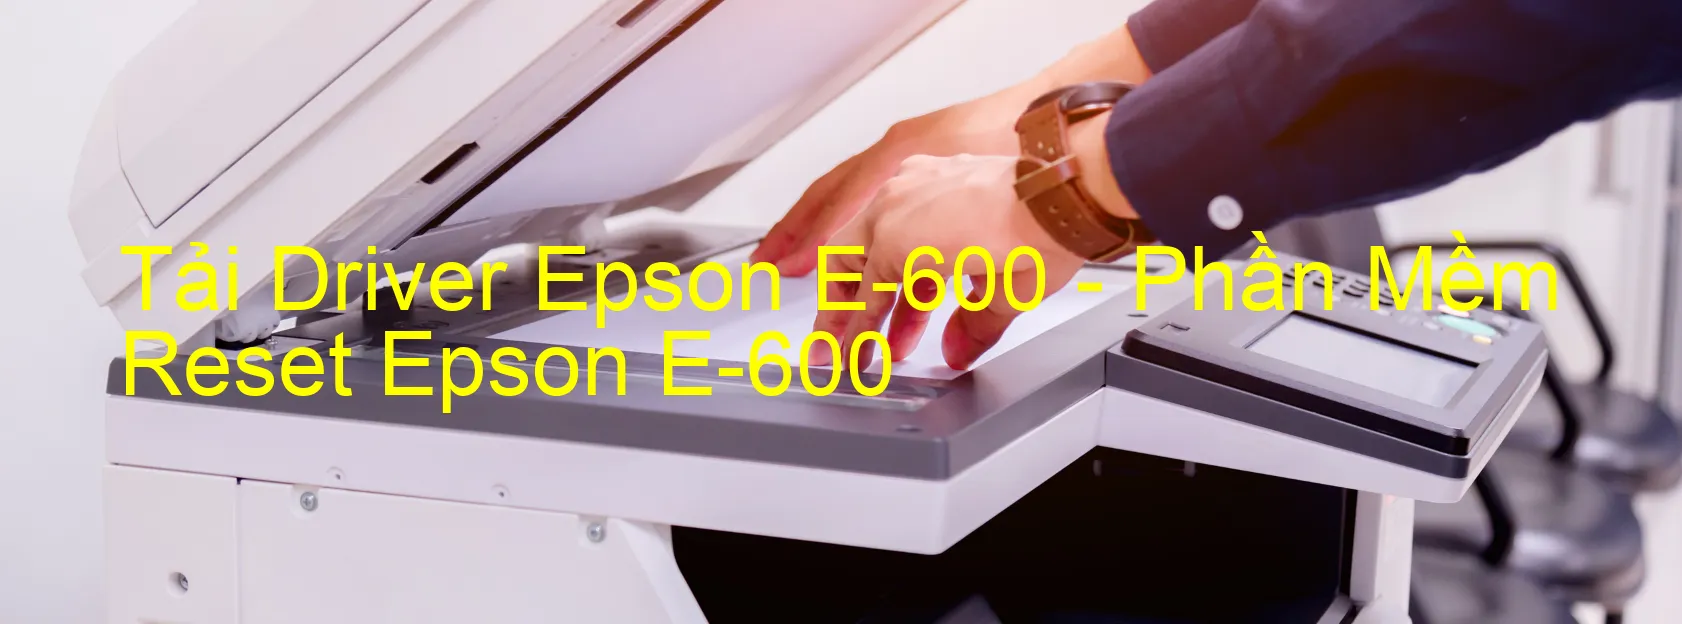 Driver Epson E-600, Phần Mềm Reset Epson E-600